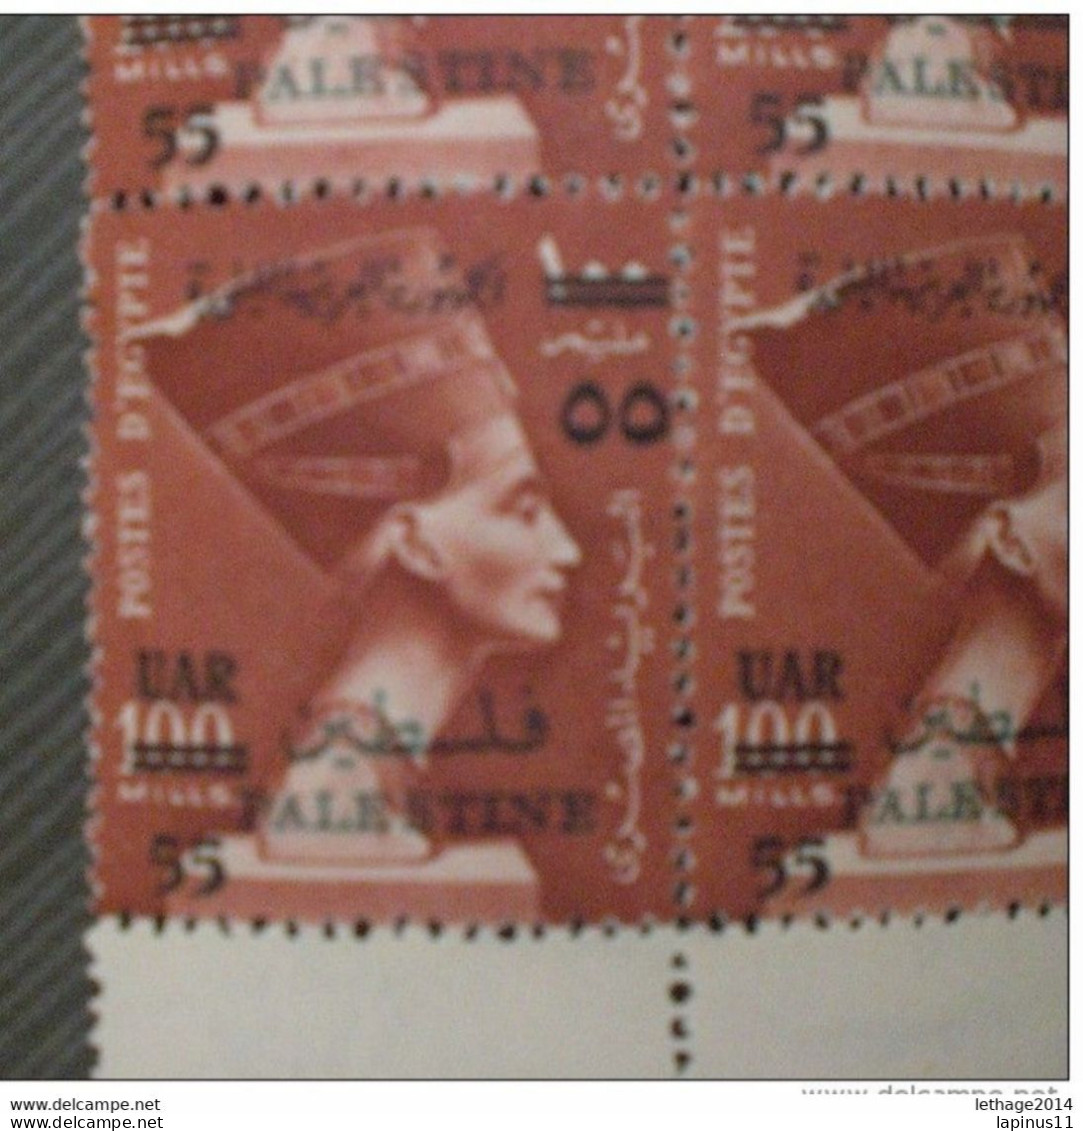 EGITTO EGYPT EGYPTE PALESTINE 1959 Queen Nefertiti UAR Postage Stamps Overprinted "PALESTINE" In English And Arabic MNH - Ungebraucht